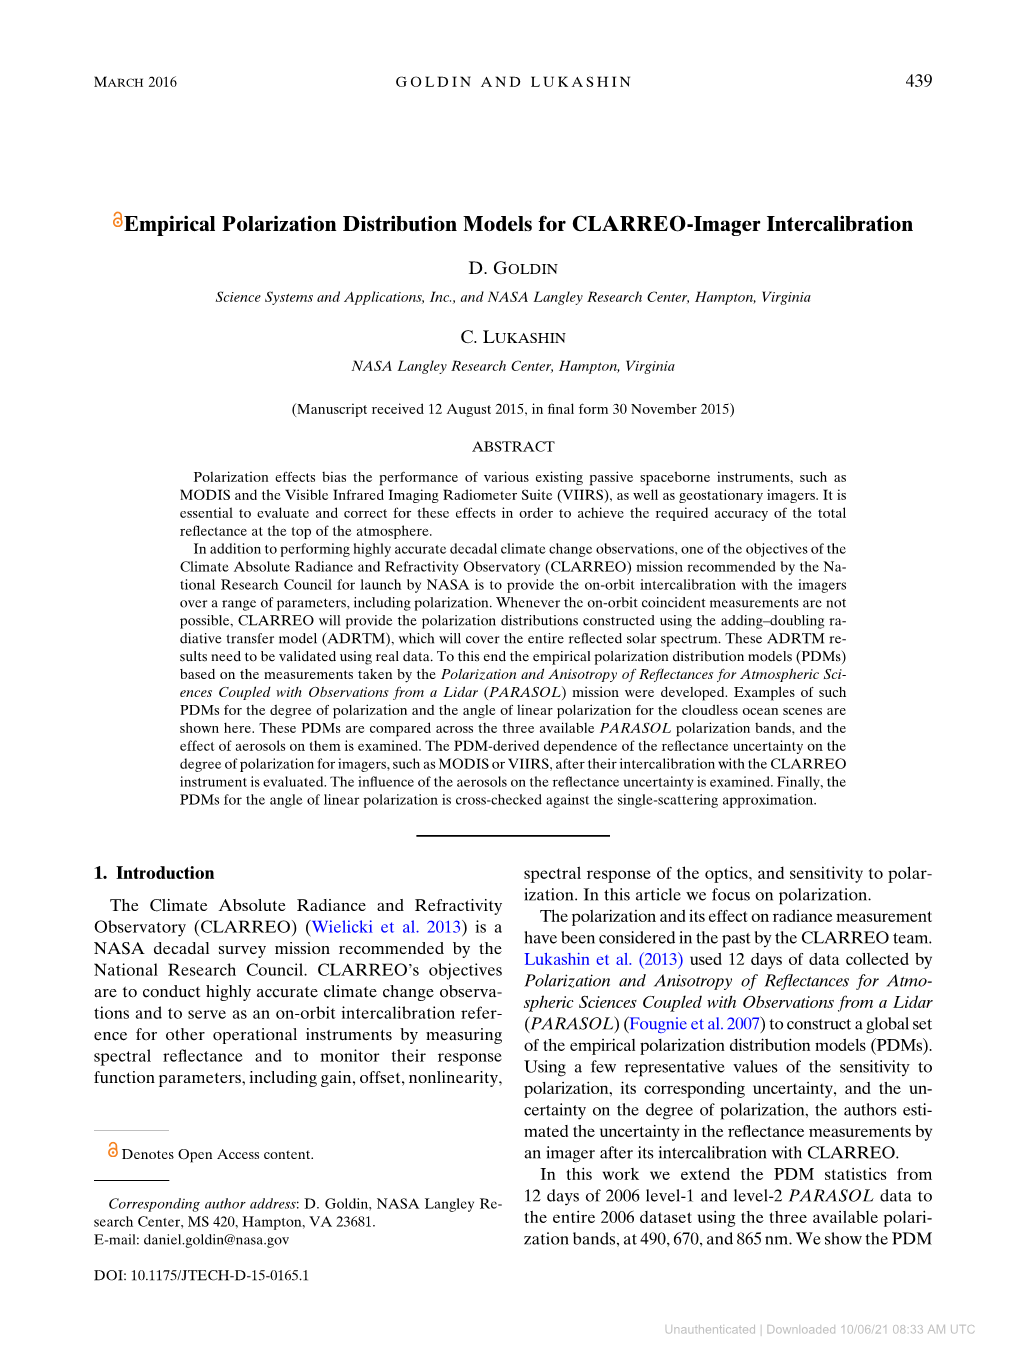 Empirical Polarization Distribution Models for CLARREO-Imager Intercalibration